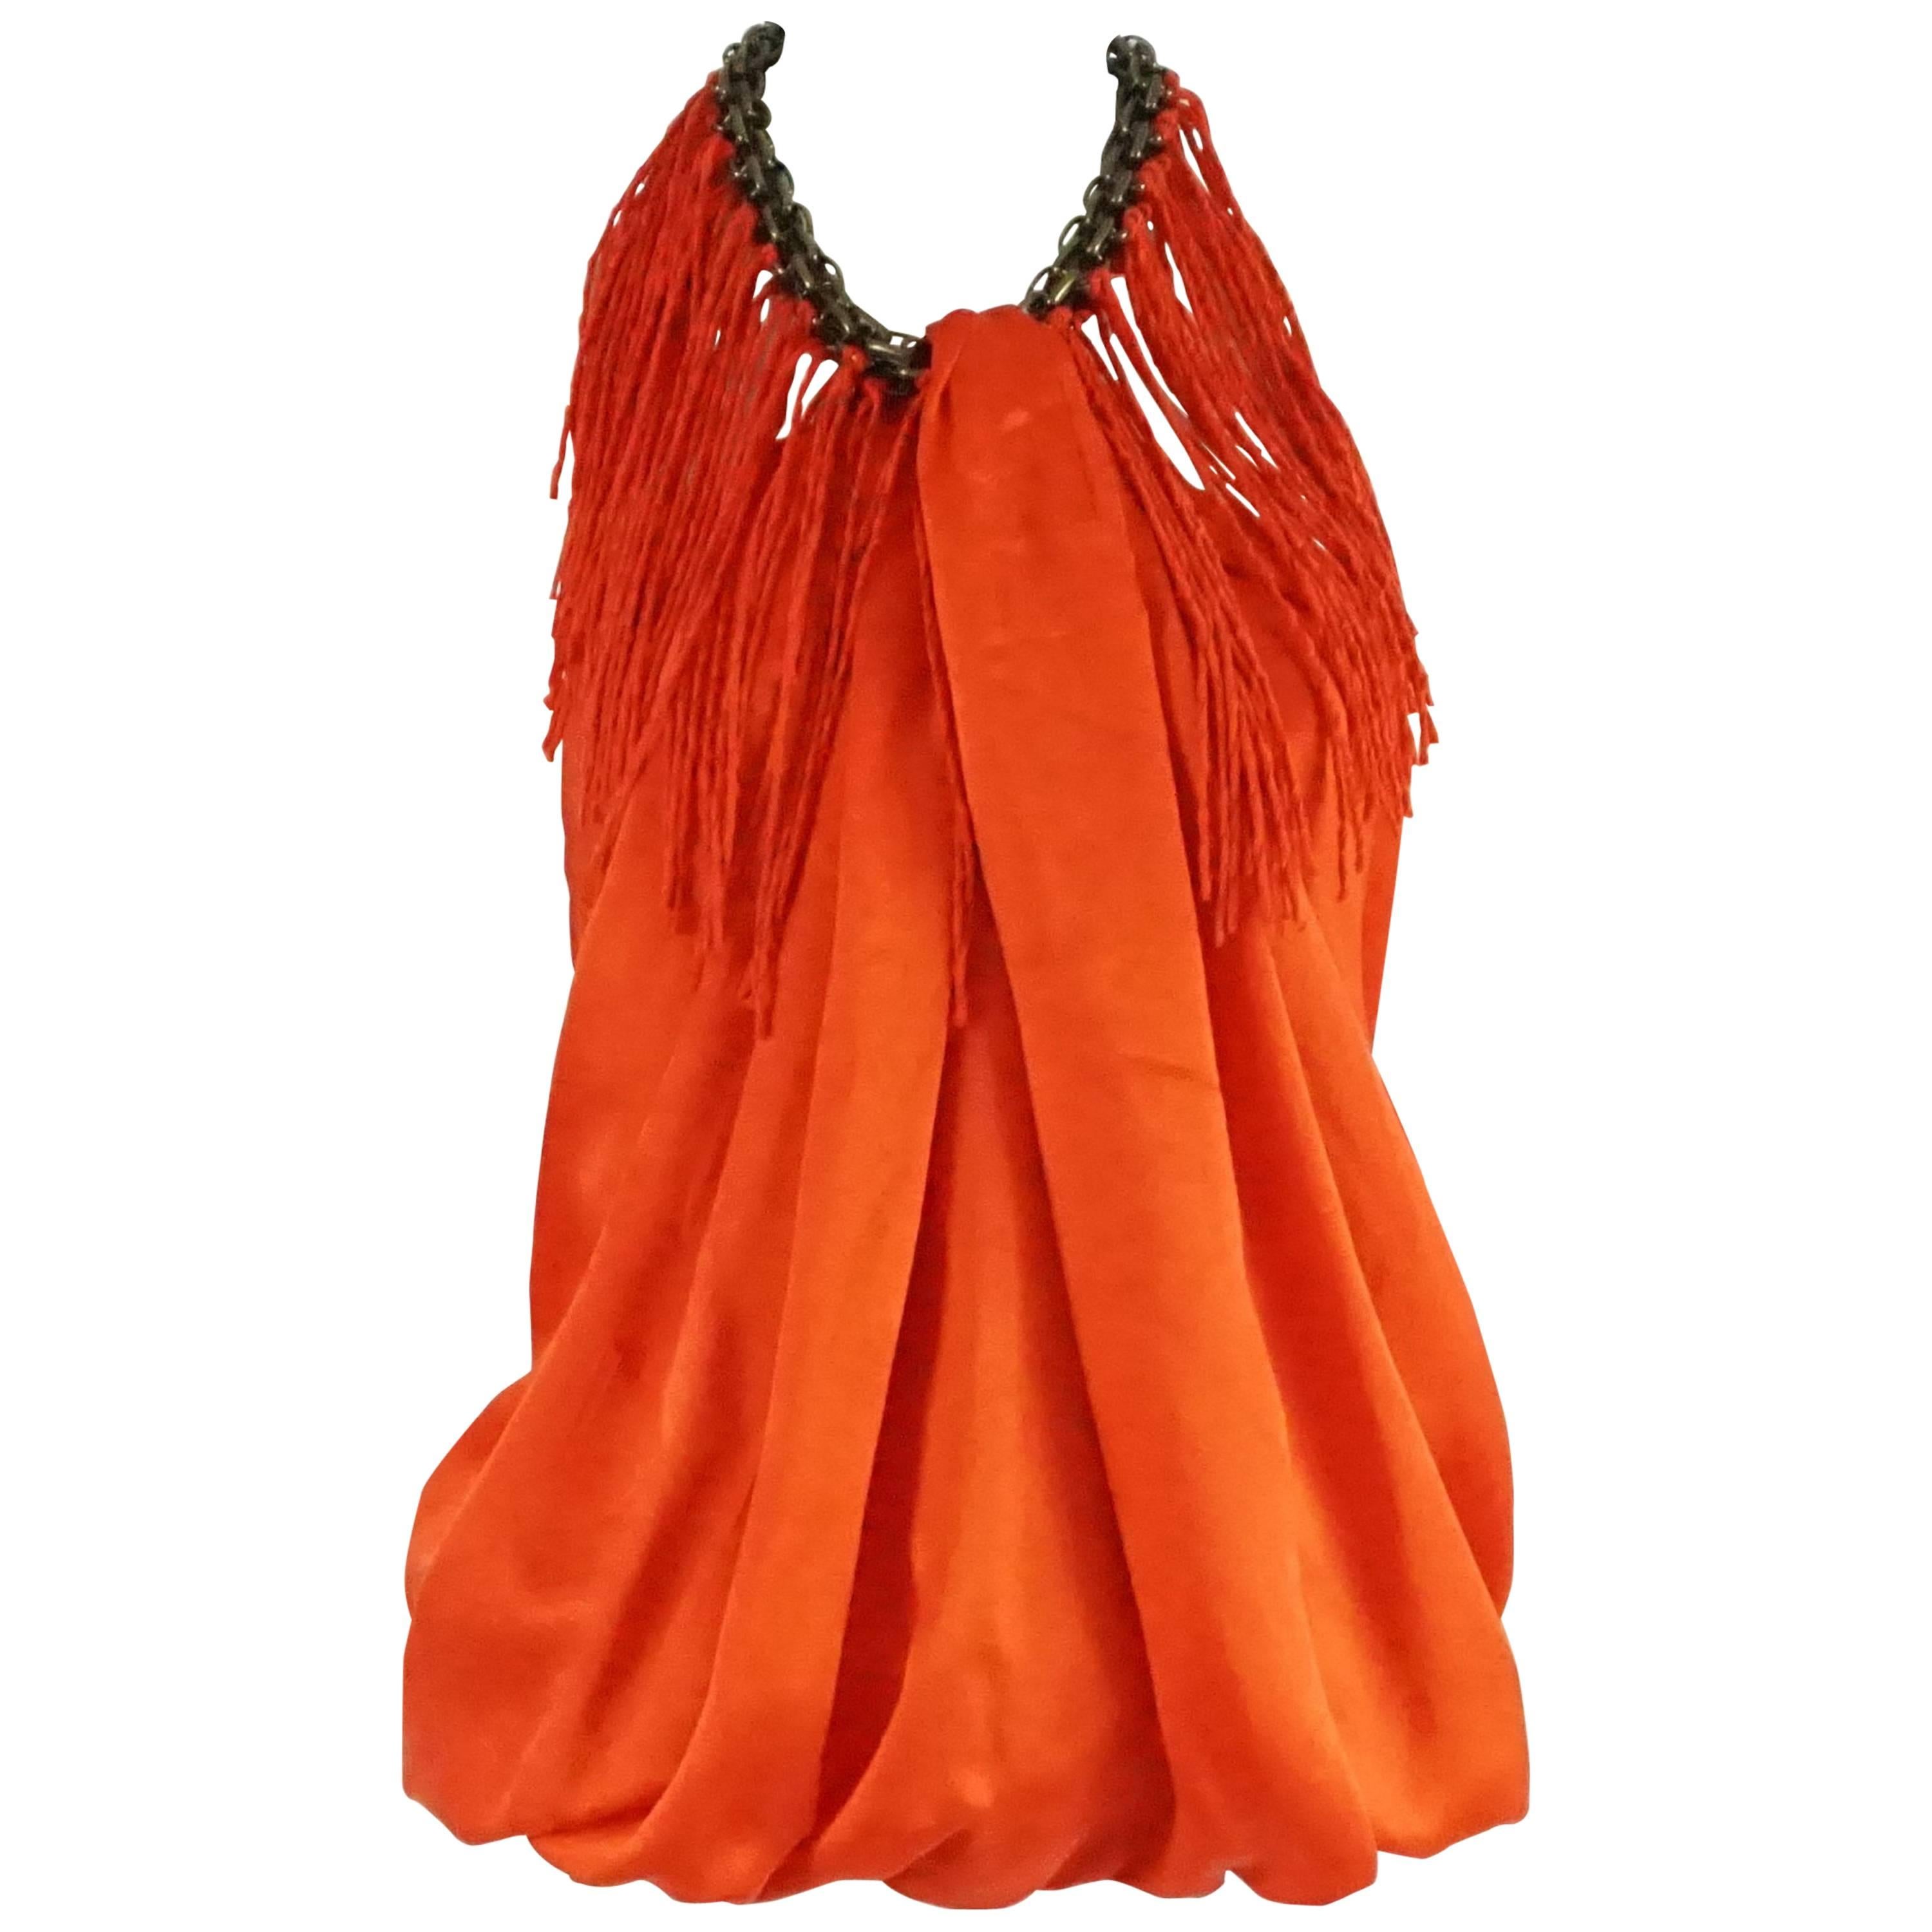 Lanvin Orange Silk Halter Top with Fringe - 38